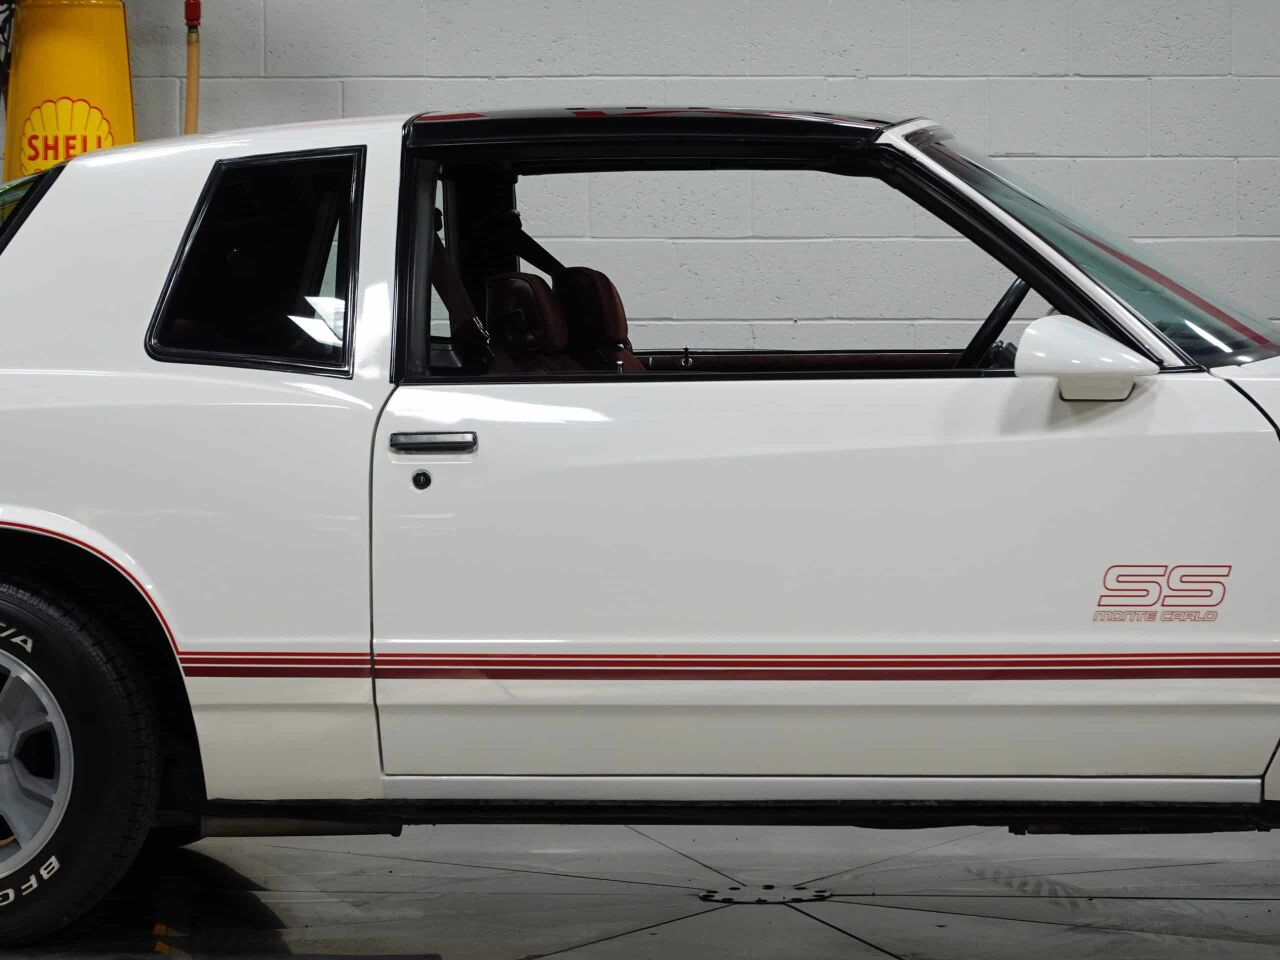 1987 Chevrolet Monte Carlo 49